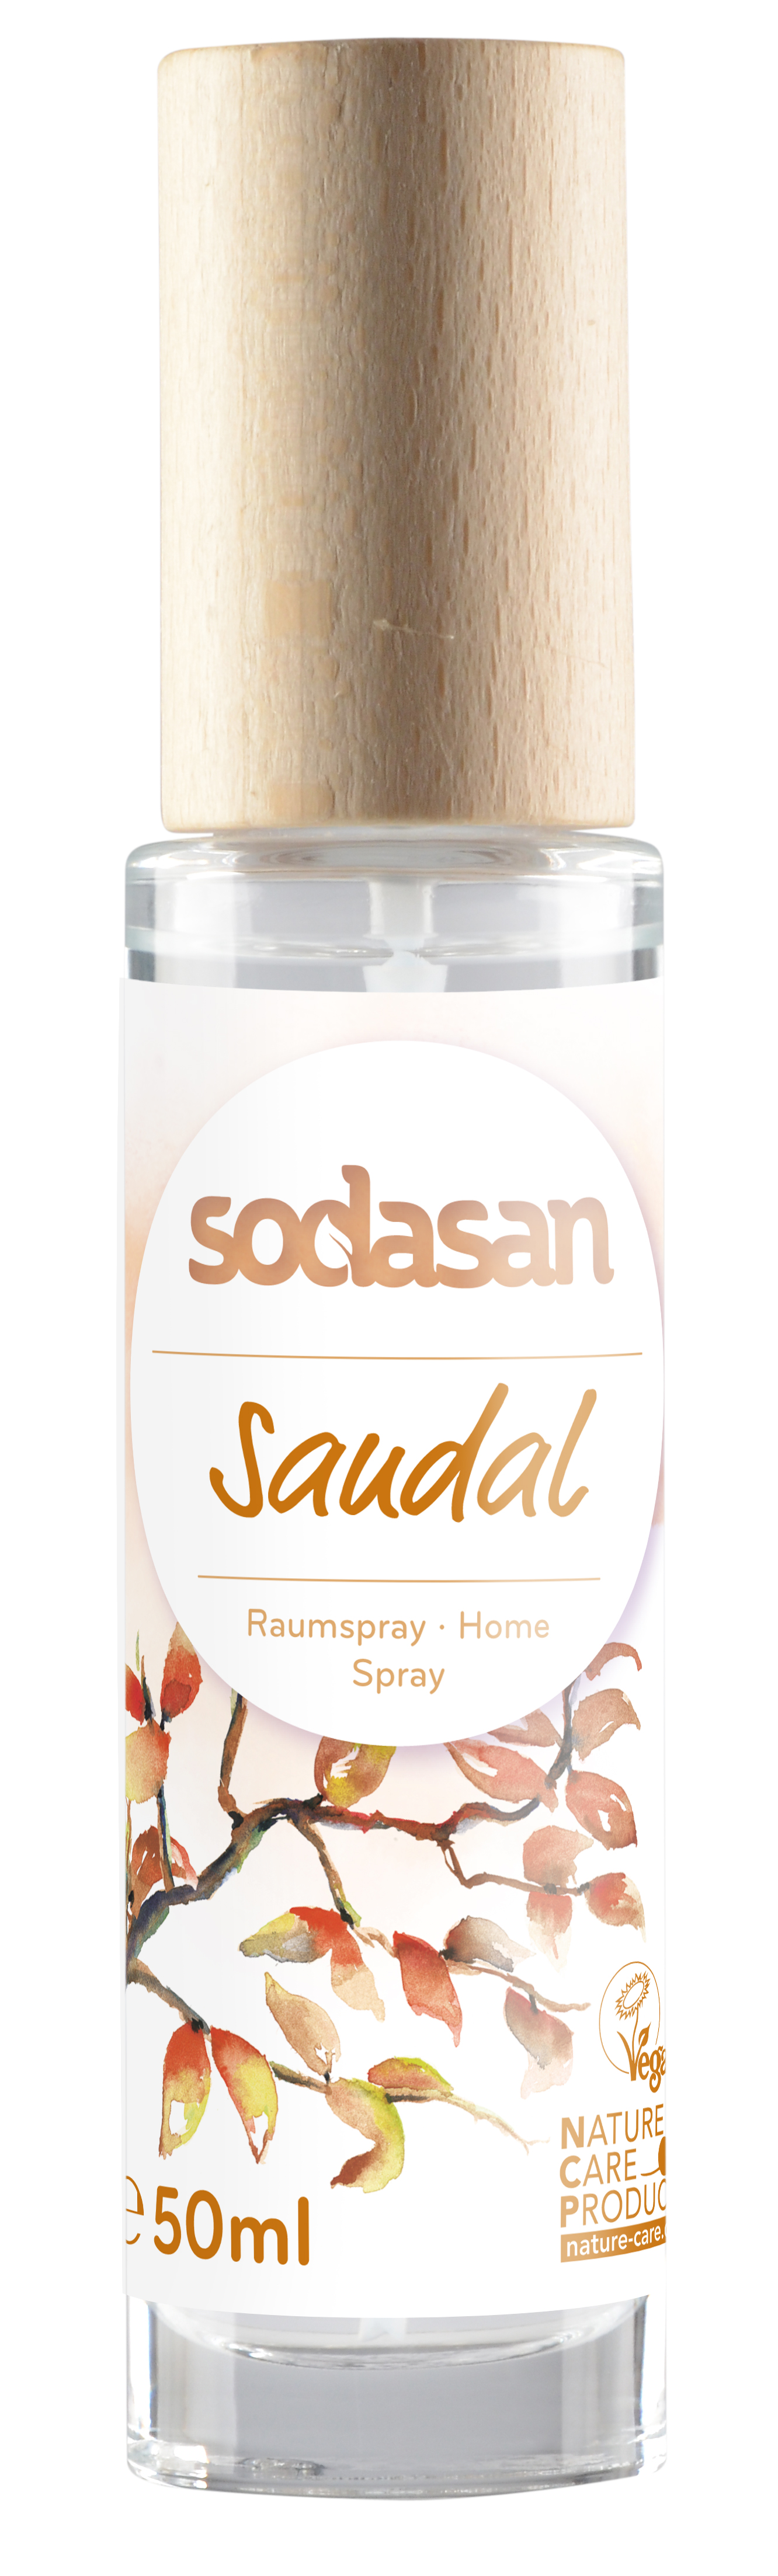 Raumspray Sandal